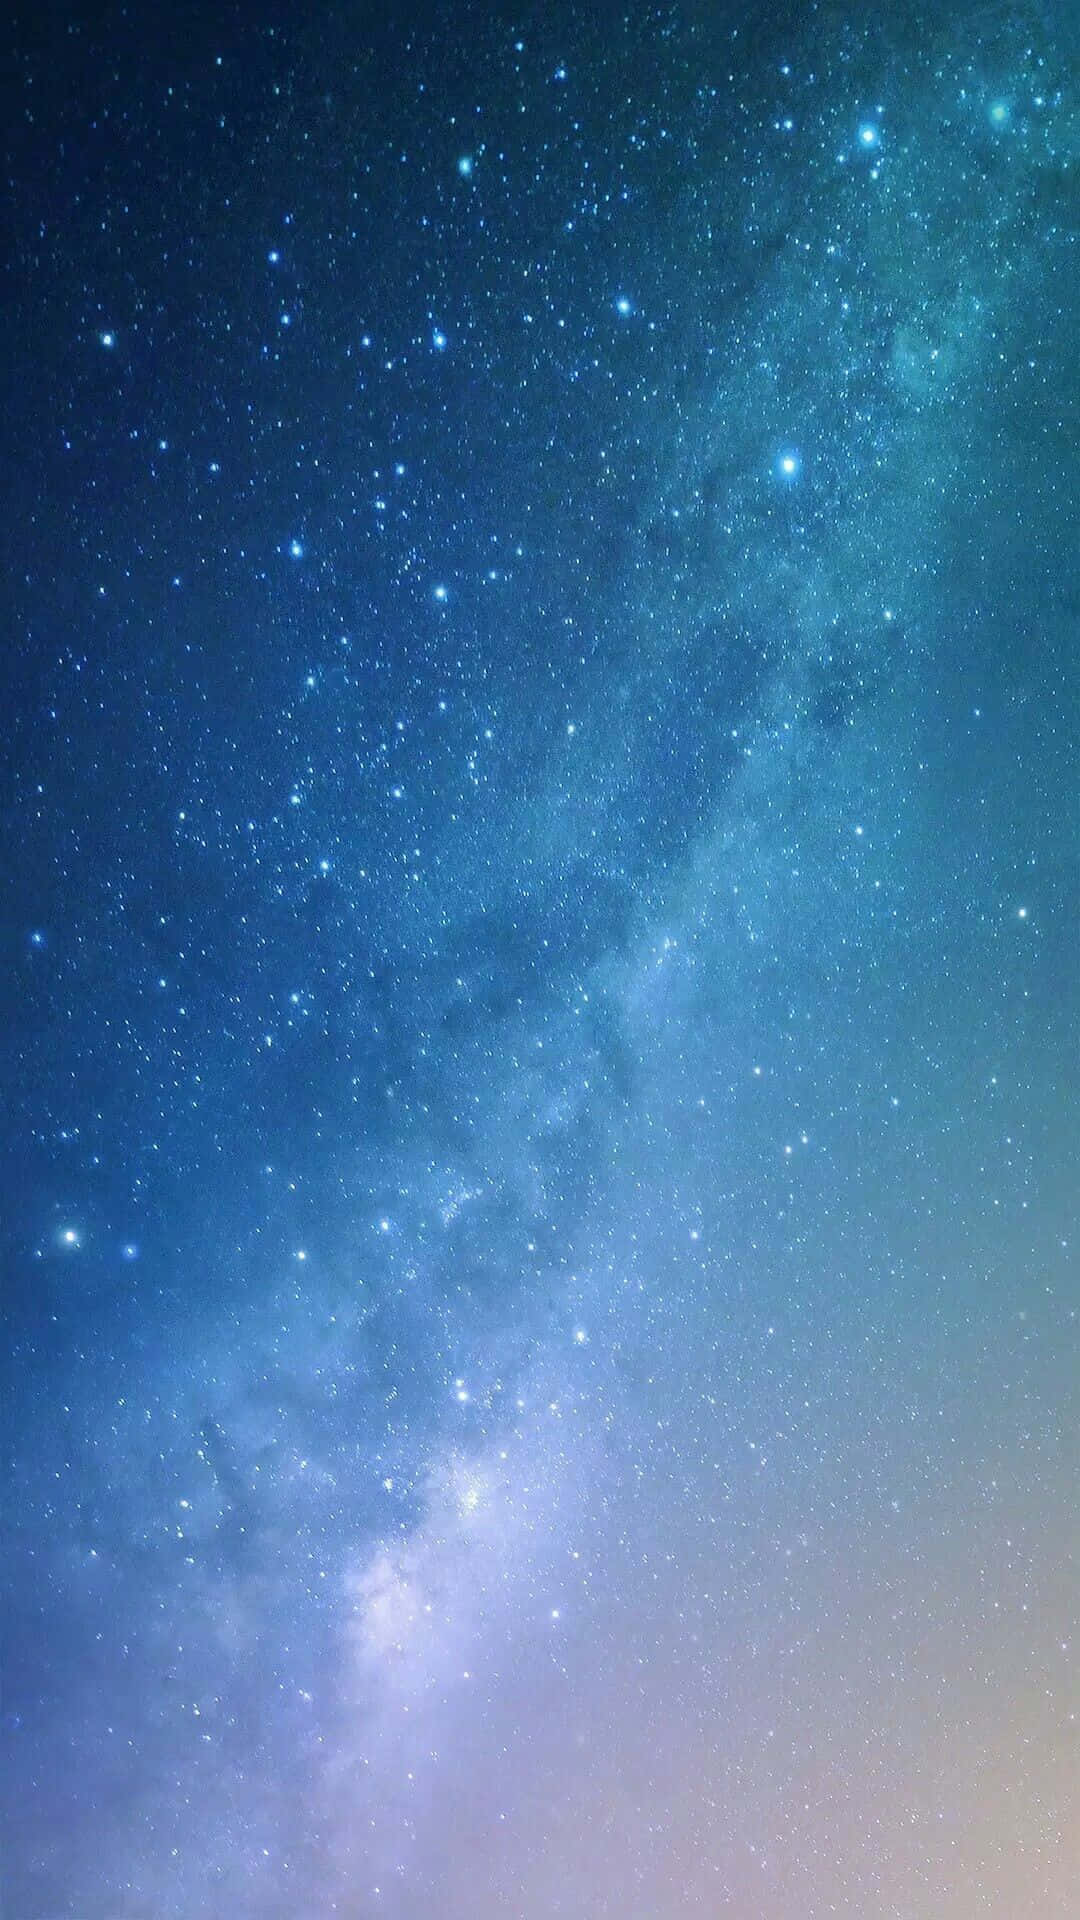 Estrelasazuis Brilhantes Cintilam No Céu Noturno. Papel de Parede